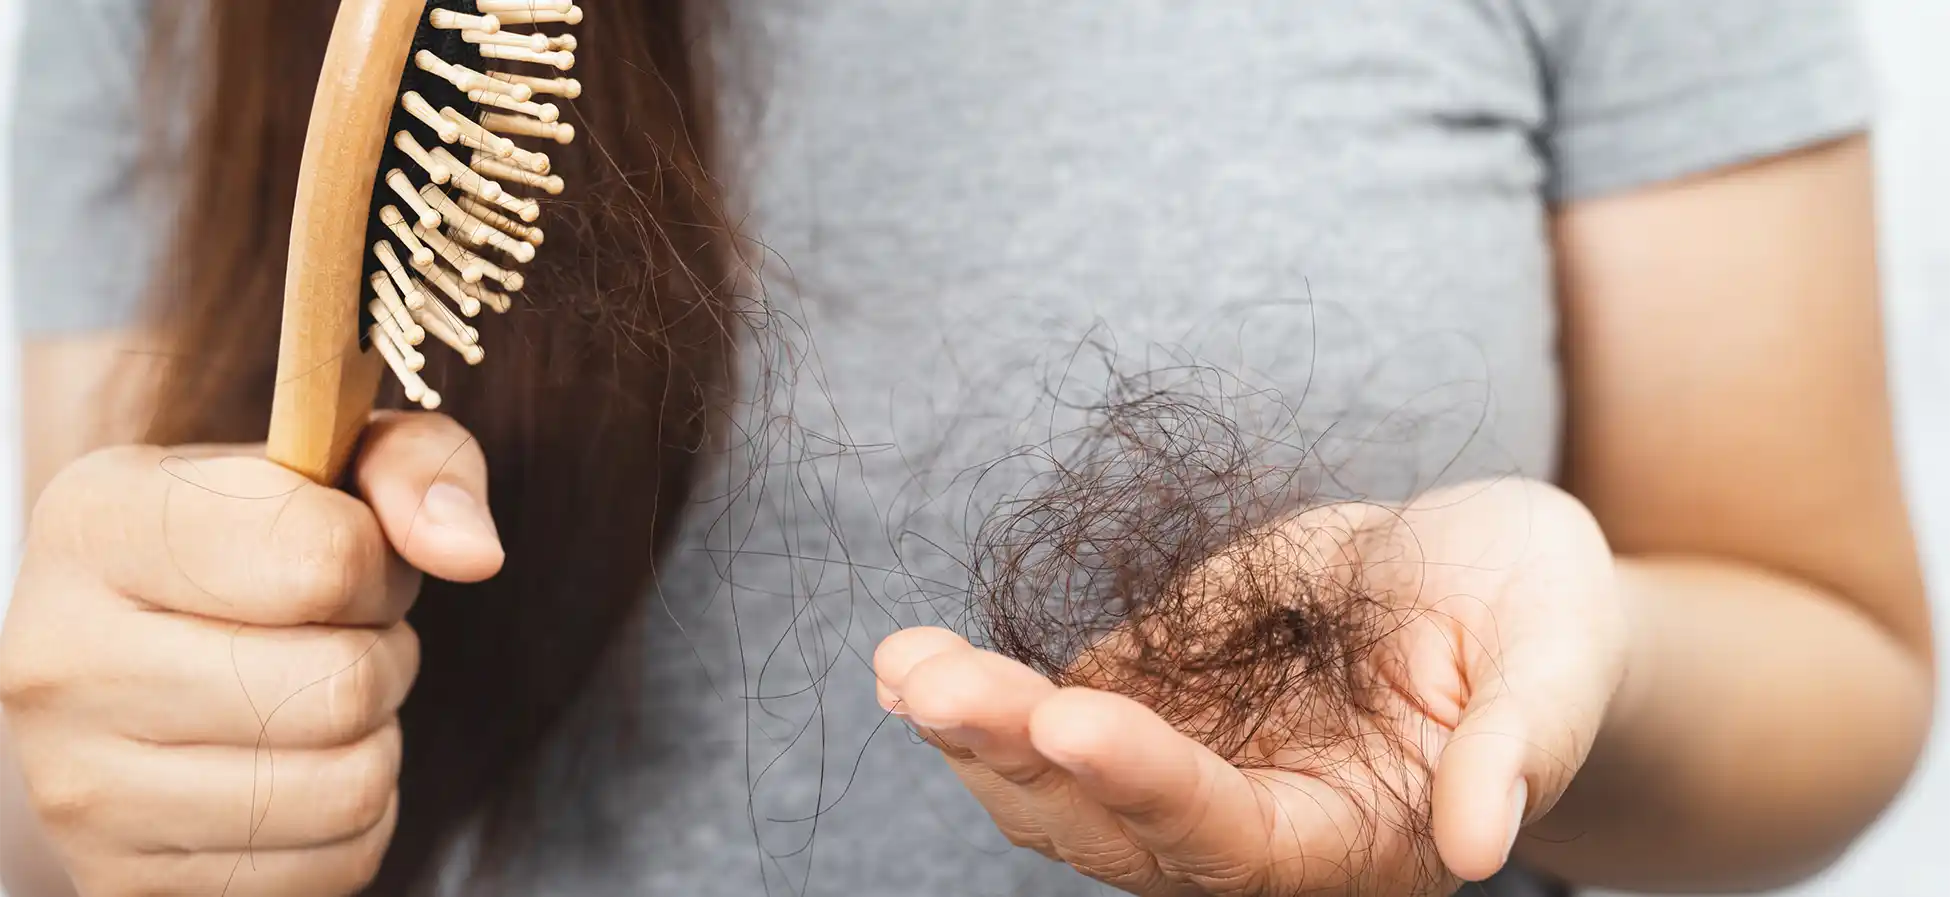 Hair loss and menopause - can it cause hair loss?